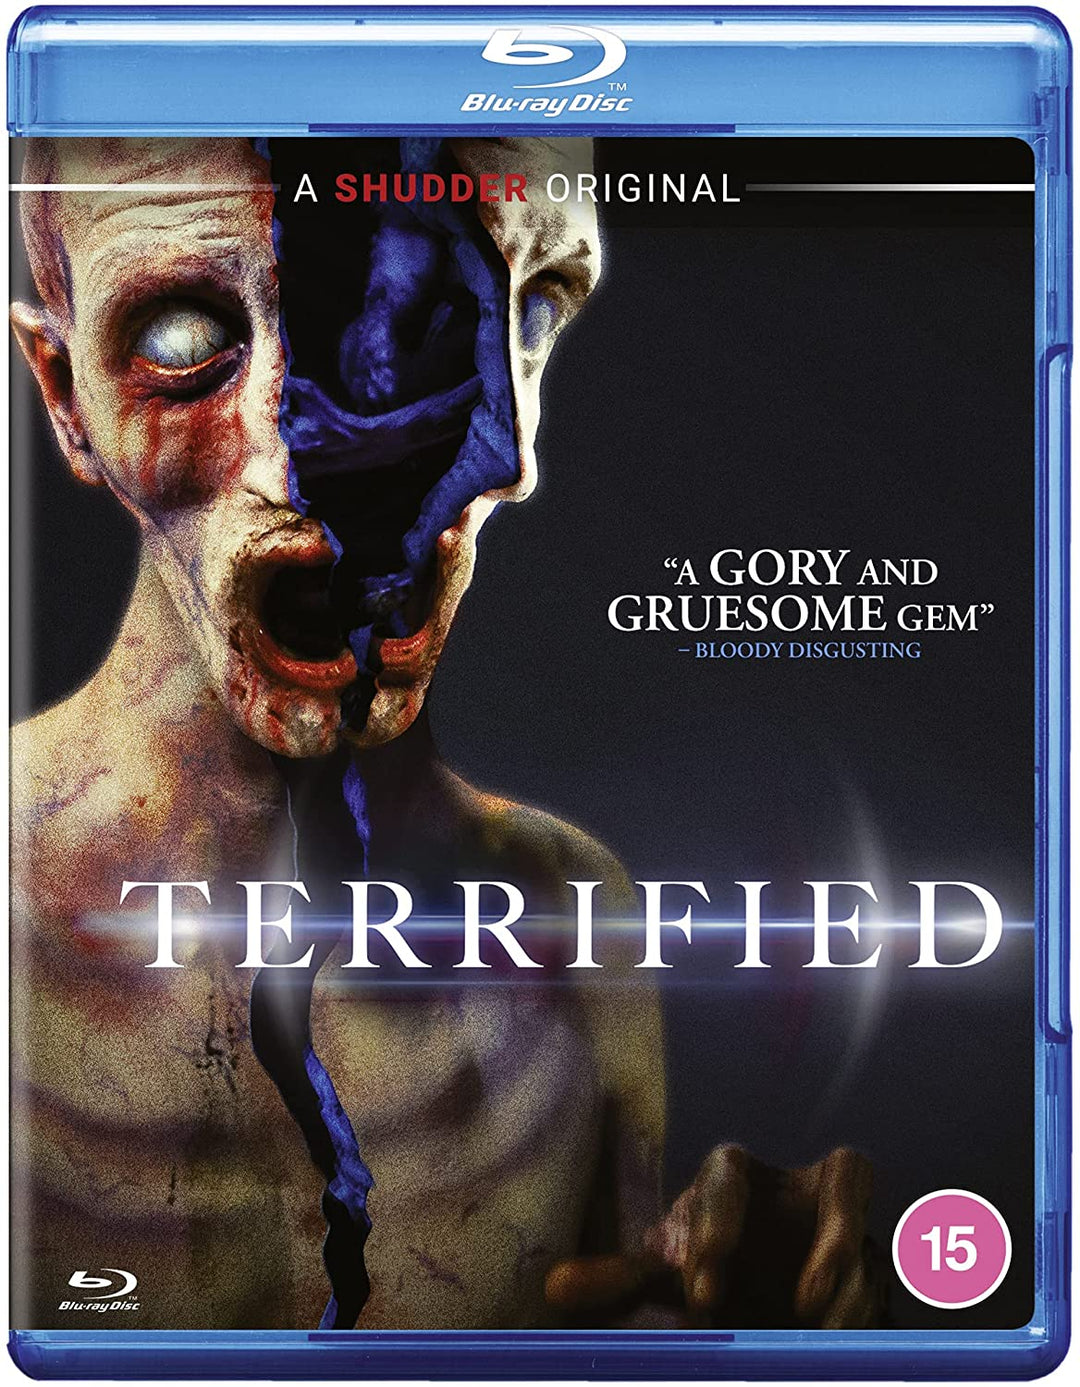 Terrified (SHUDDER) [2017] [Blu-ray]